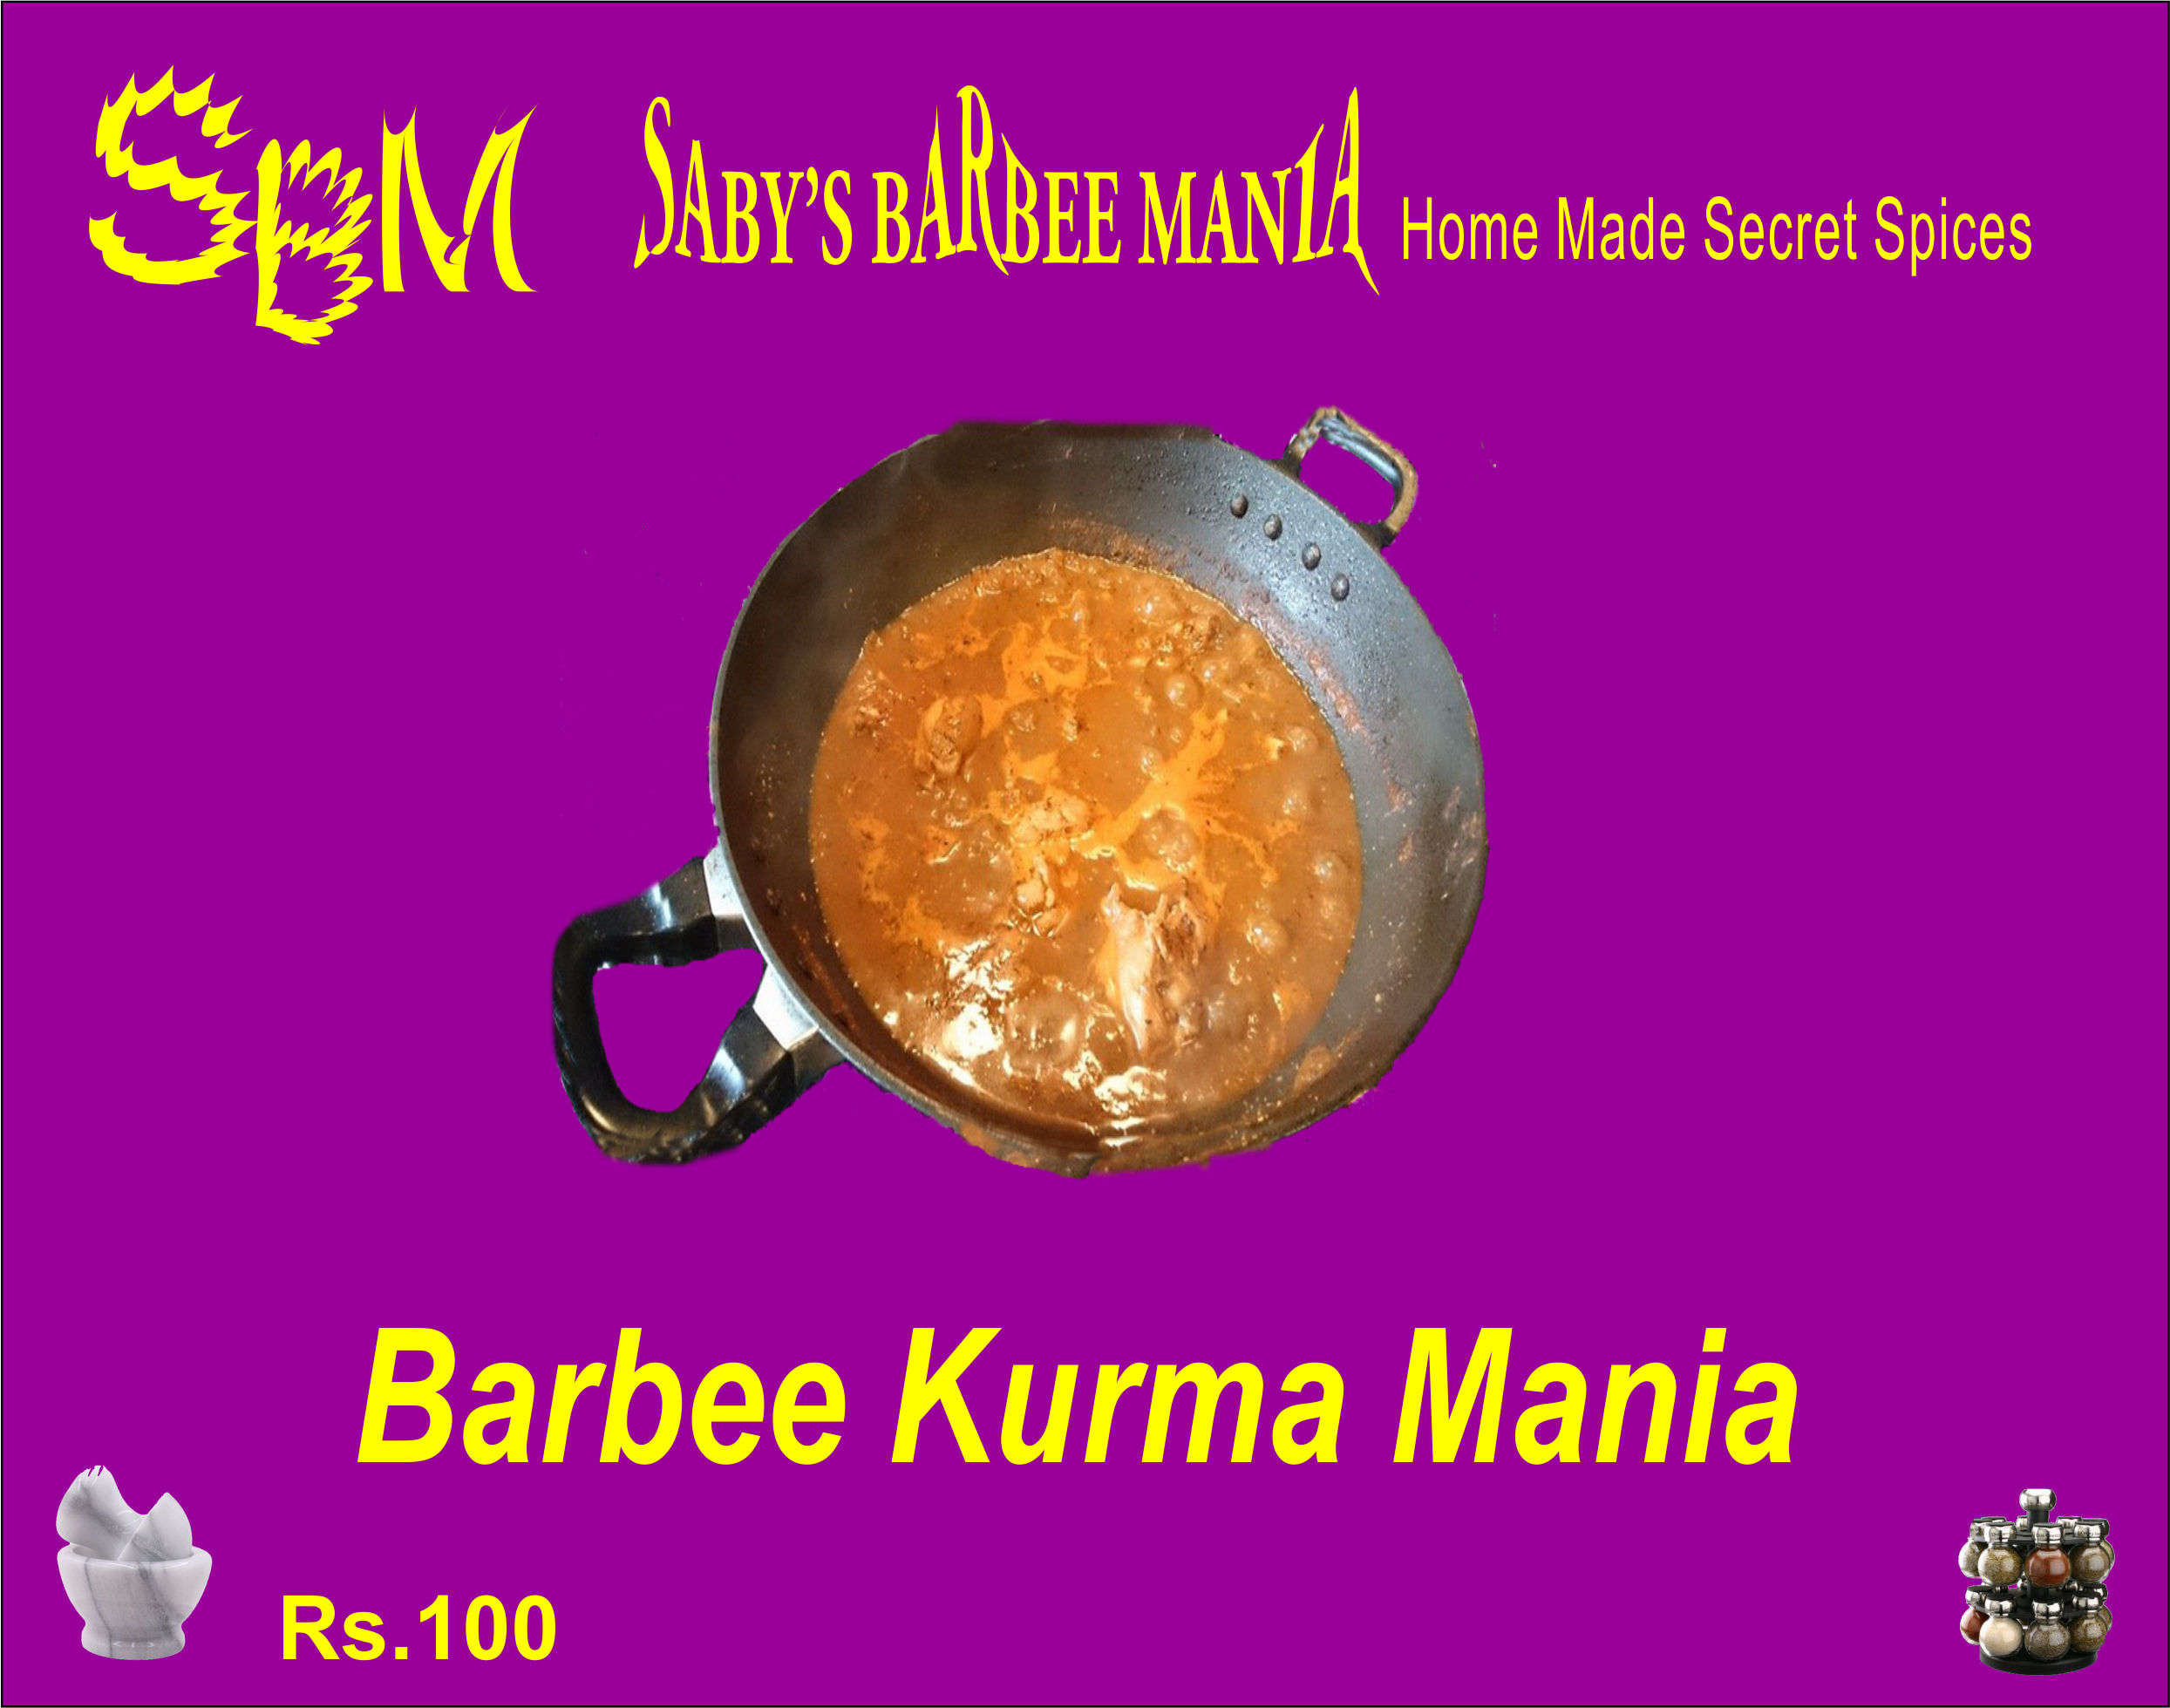 Barbee Kurma Mania